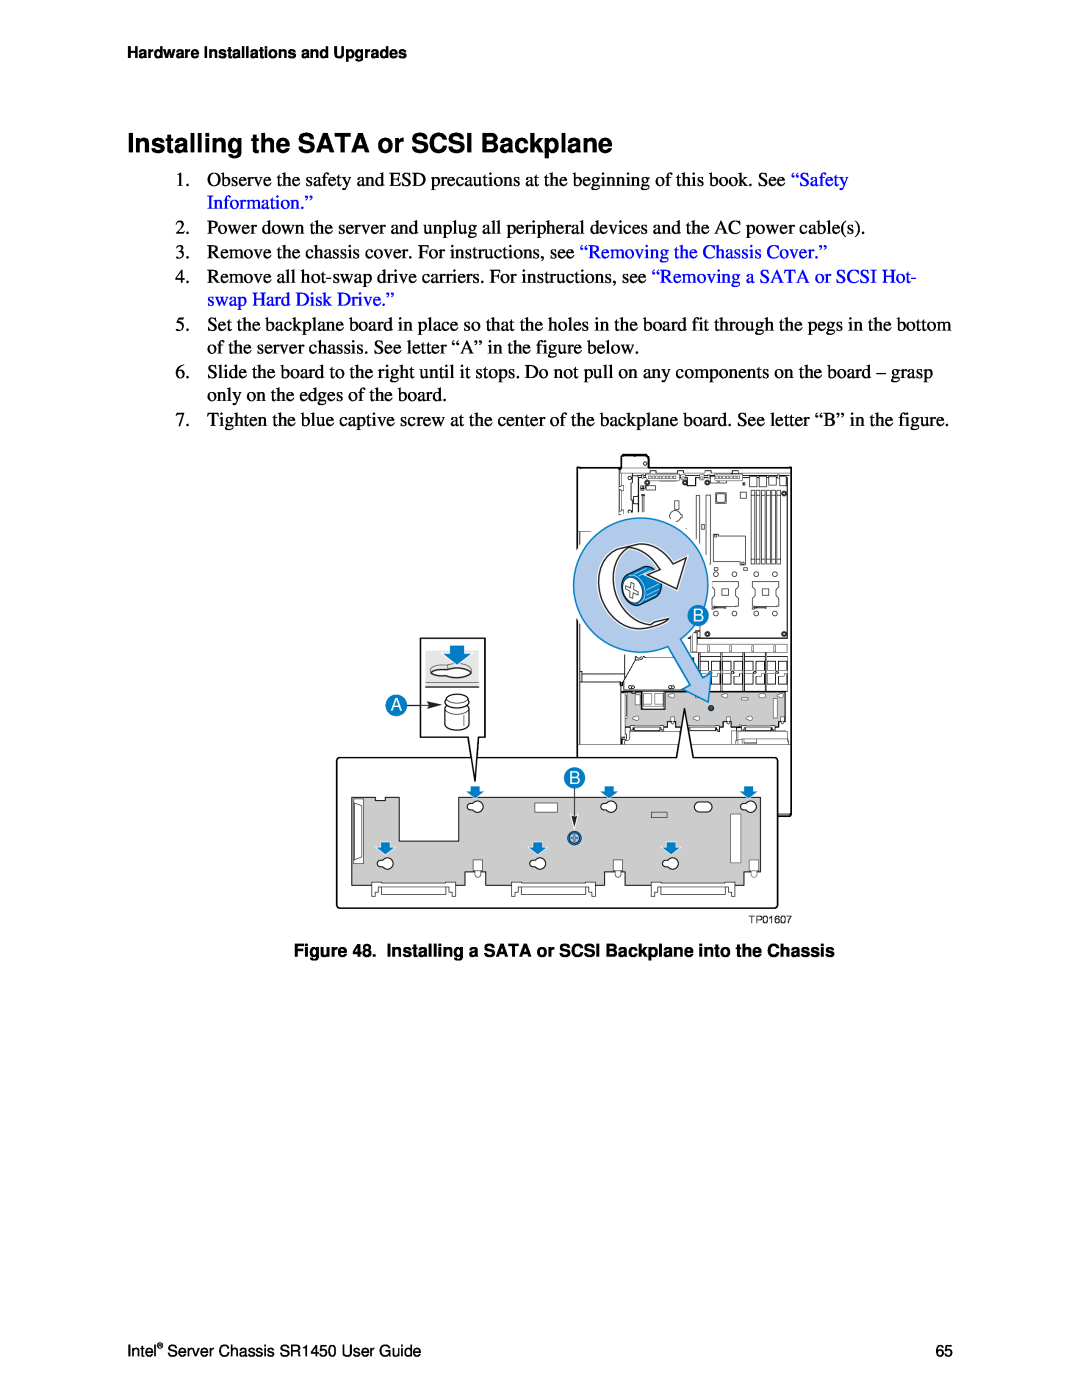 Intel manual Installing the SATA or SCSI Backplane, Intel Server Chassis SR1450 User Guide 